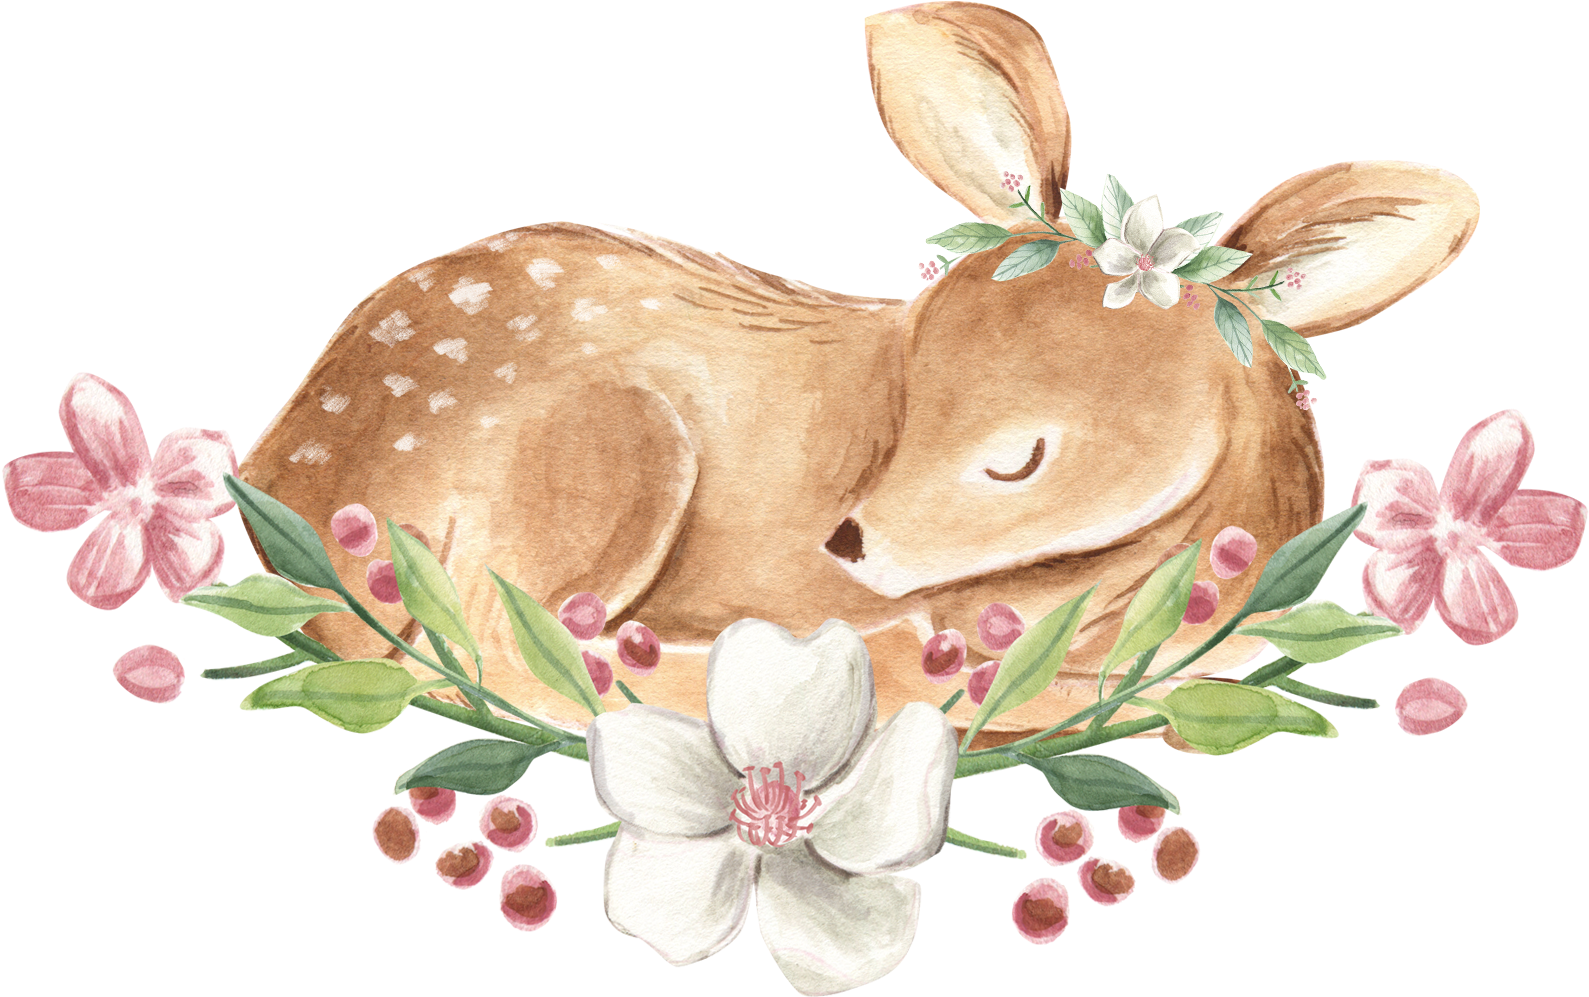 Sleeping Fawn Floral Wreath Illustration